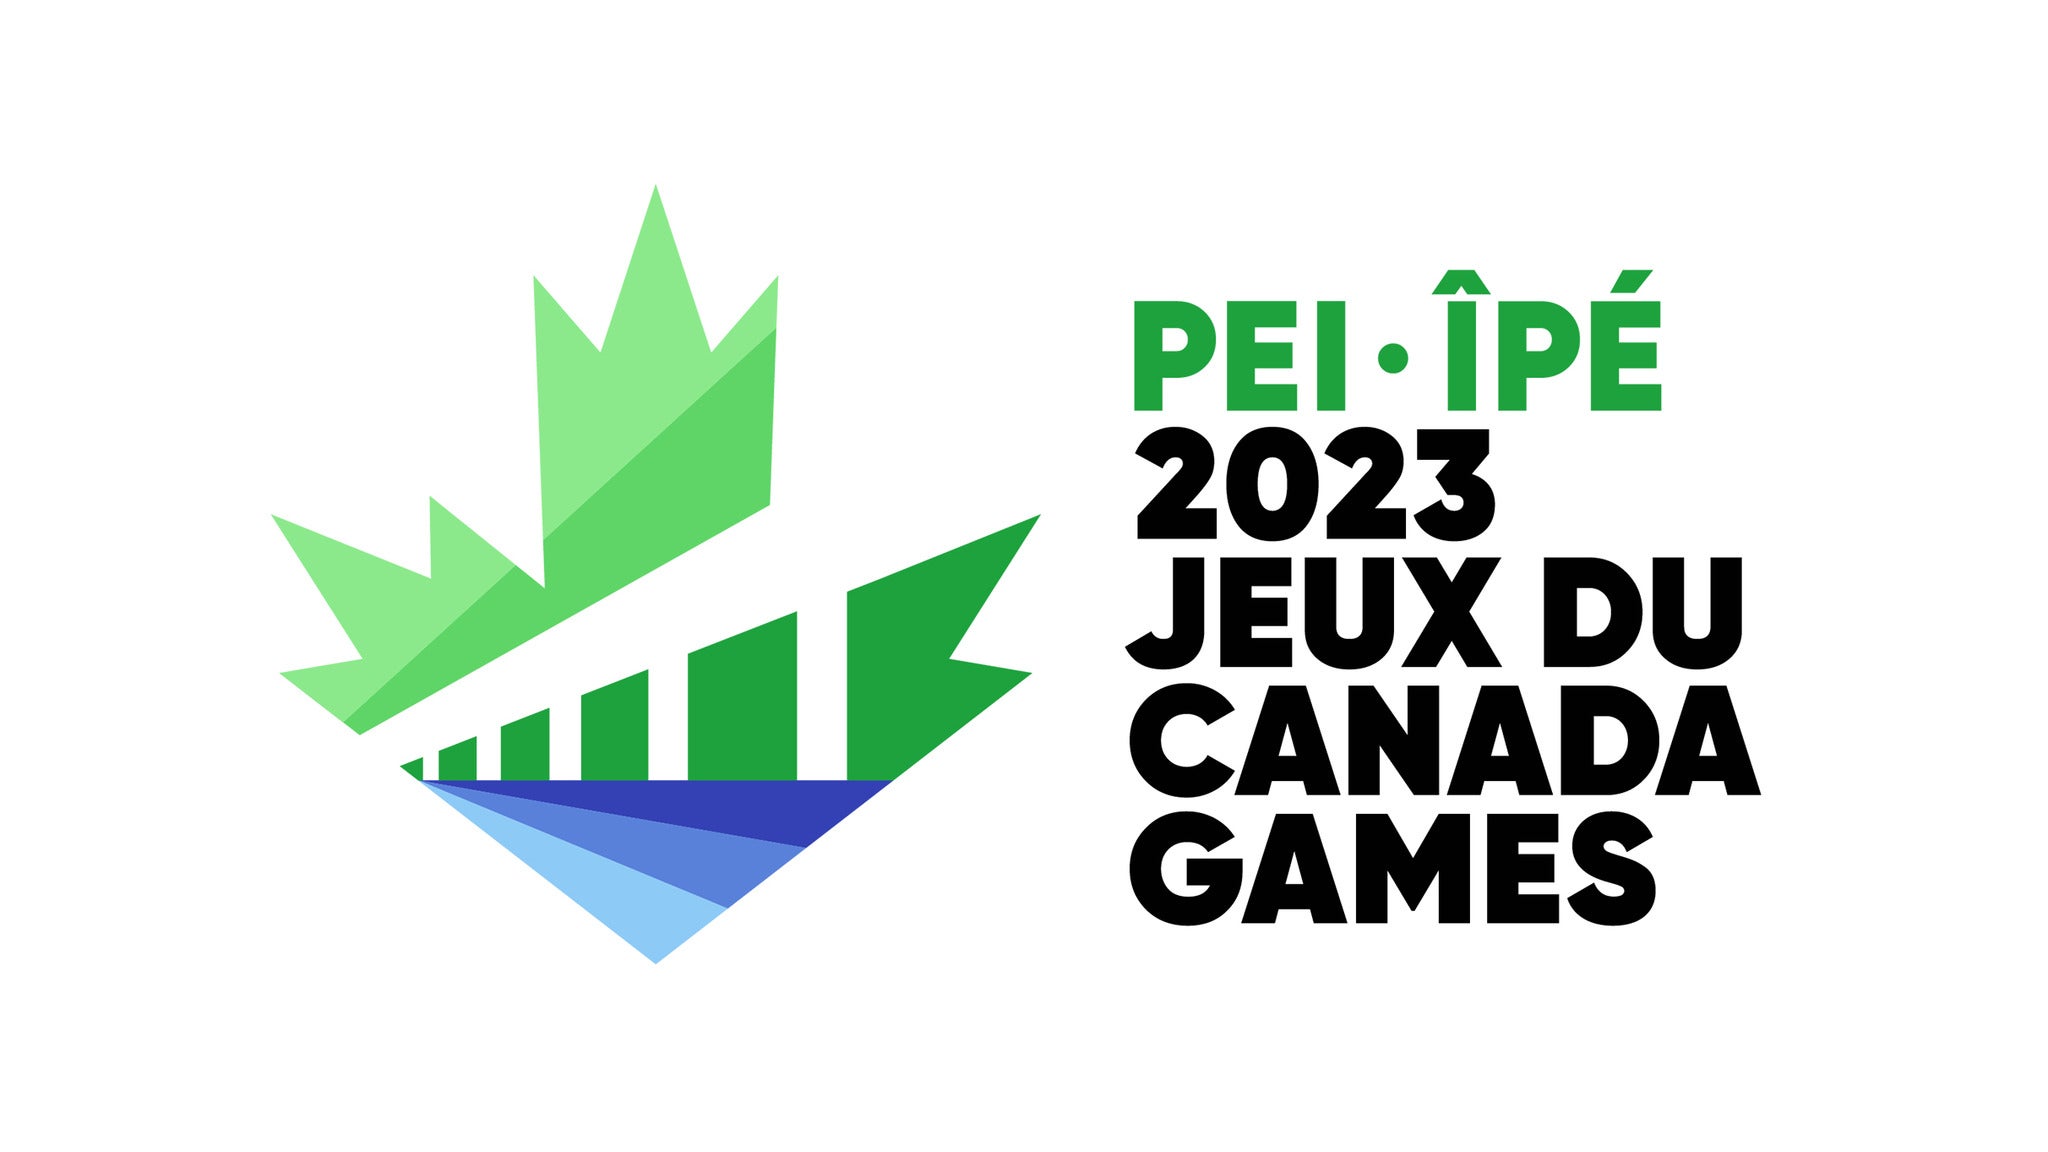 2023 Jeux du Canada Games - Feb 21 Single Day Pass / Billet De Journée in Summerside promo photo for Offer presale offer code